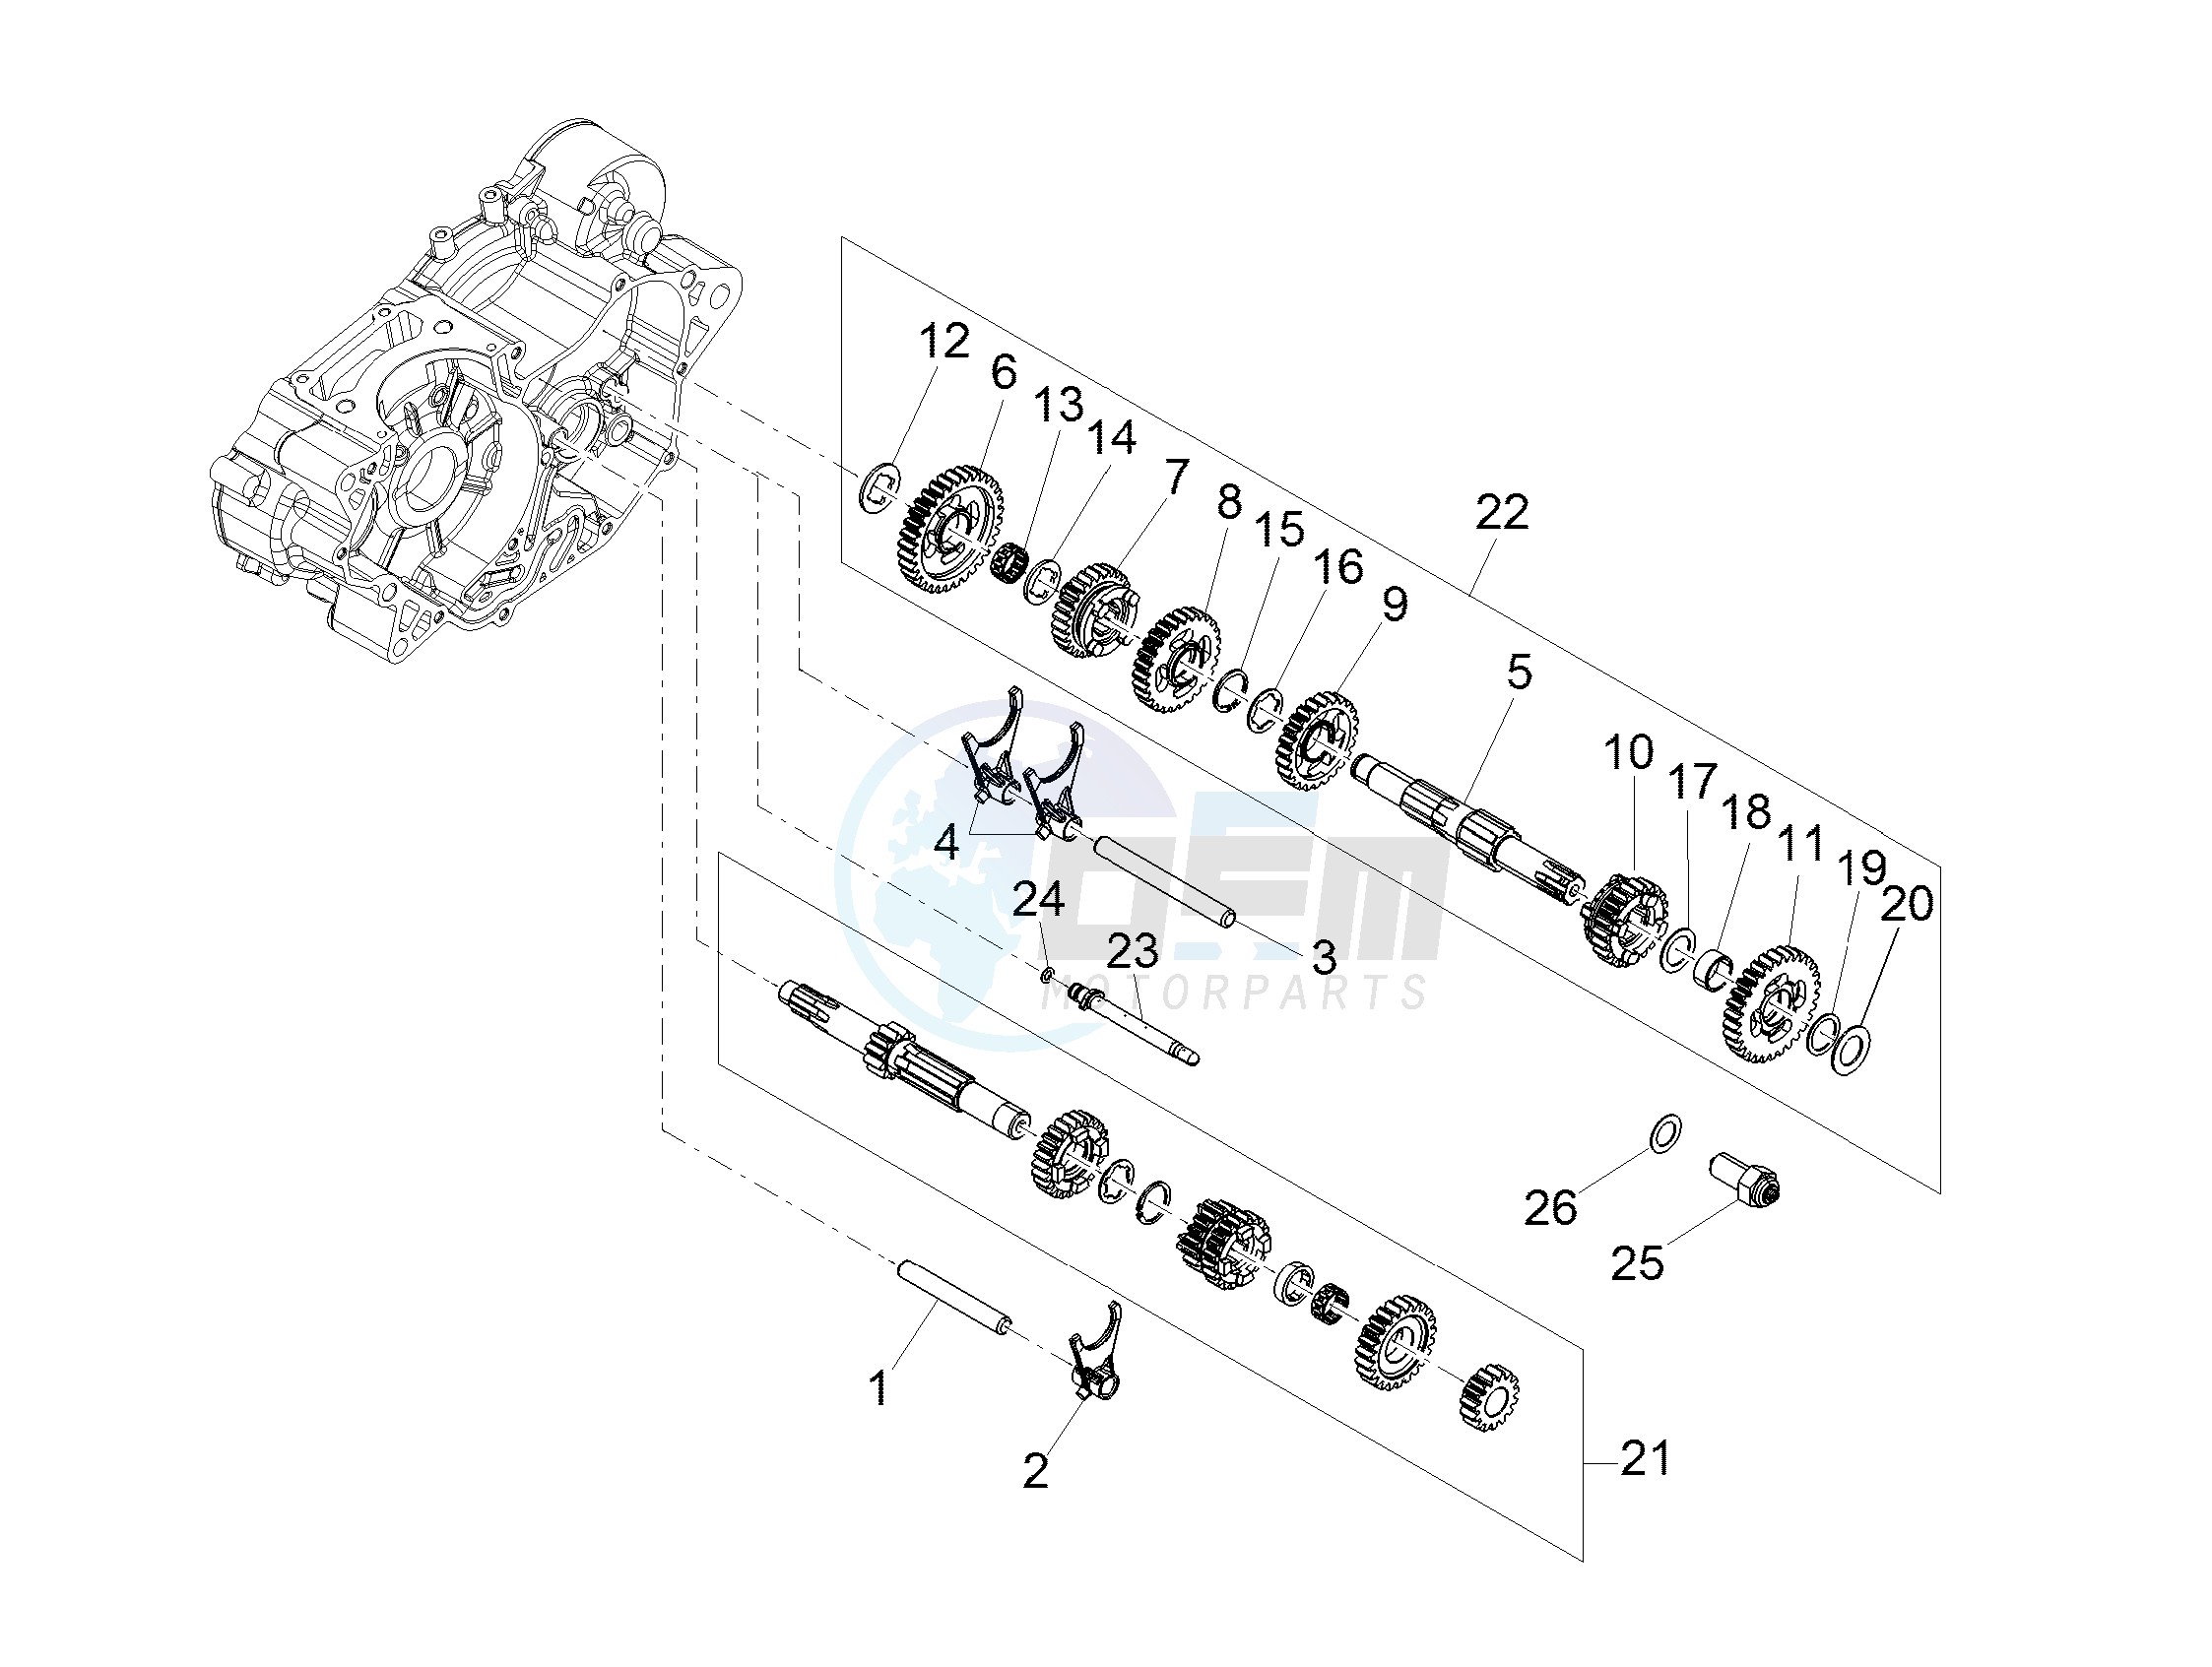 Gear box - Gear assembly image